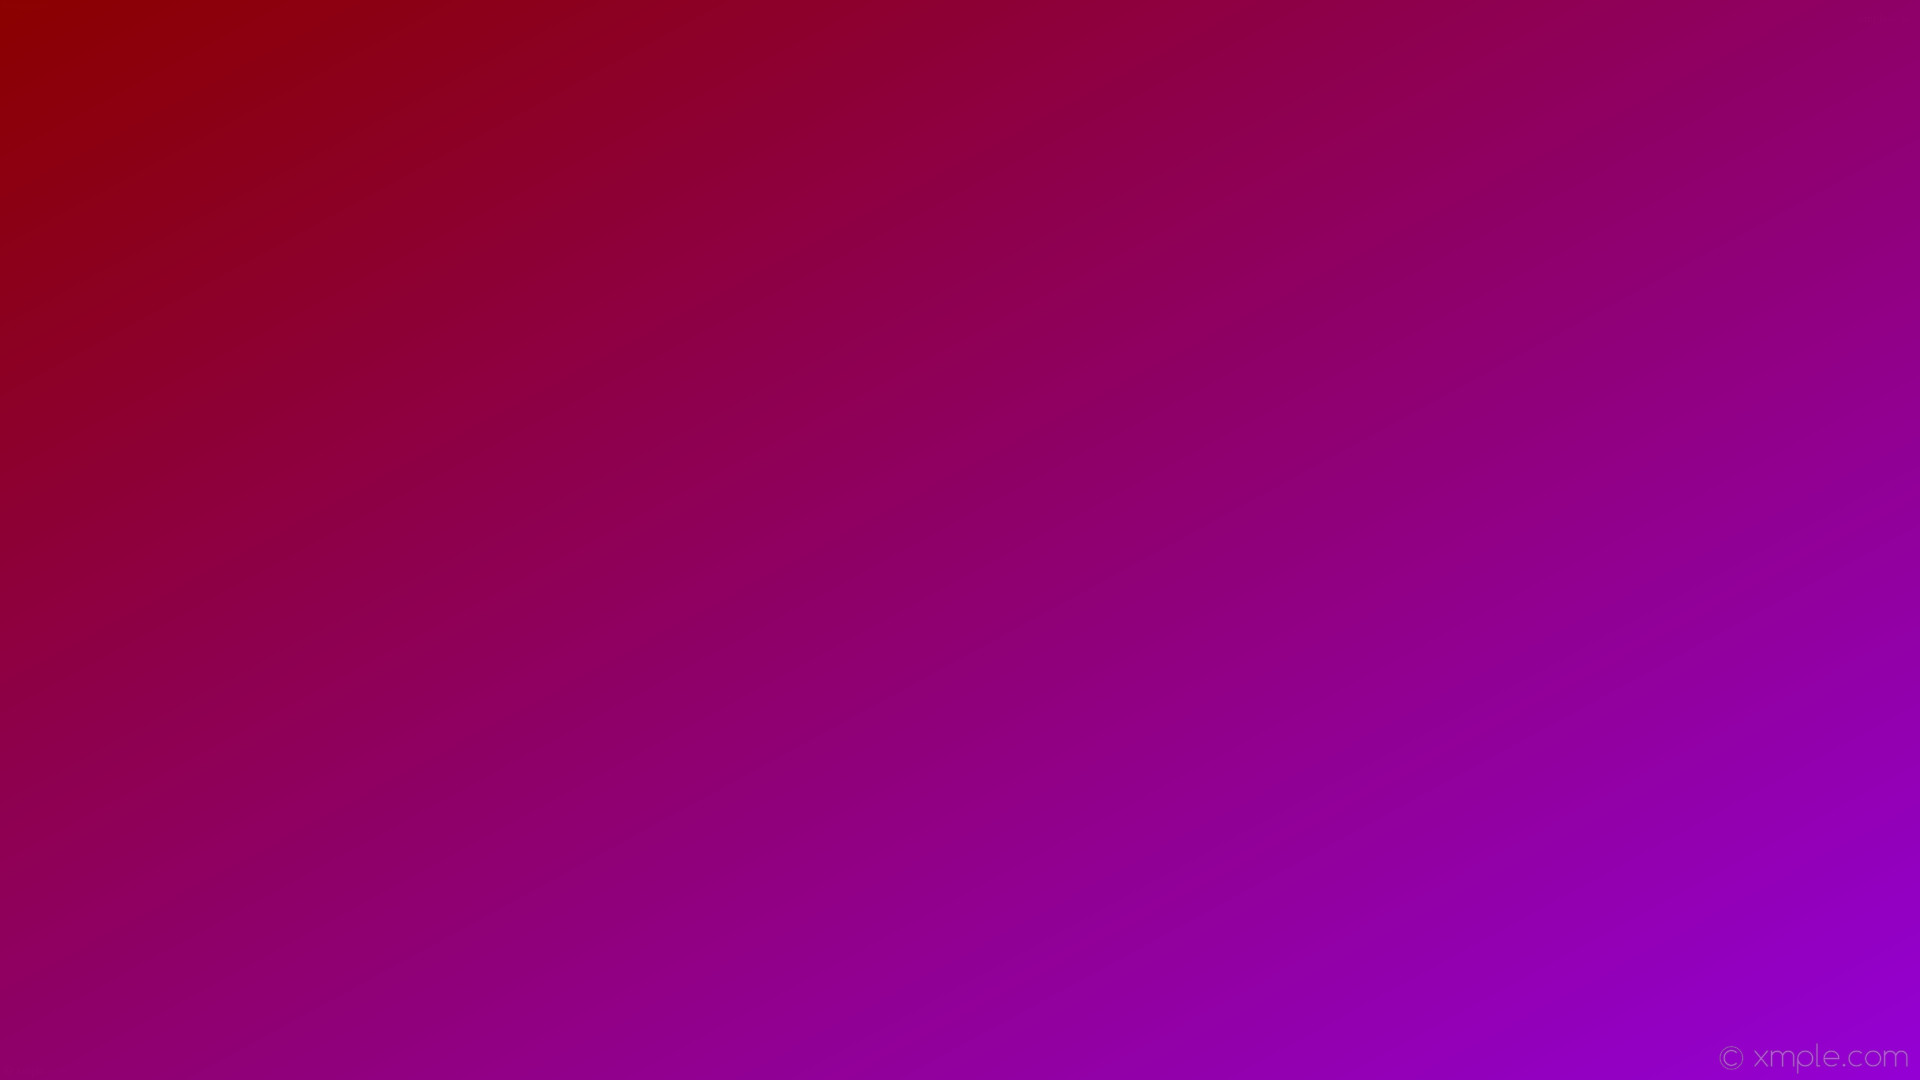 1920x1080 wallpaper purple red gradient linear dark violet dark red #9400d3 #8b0000  330Â°